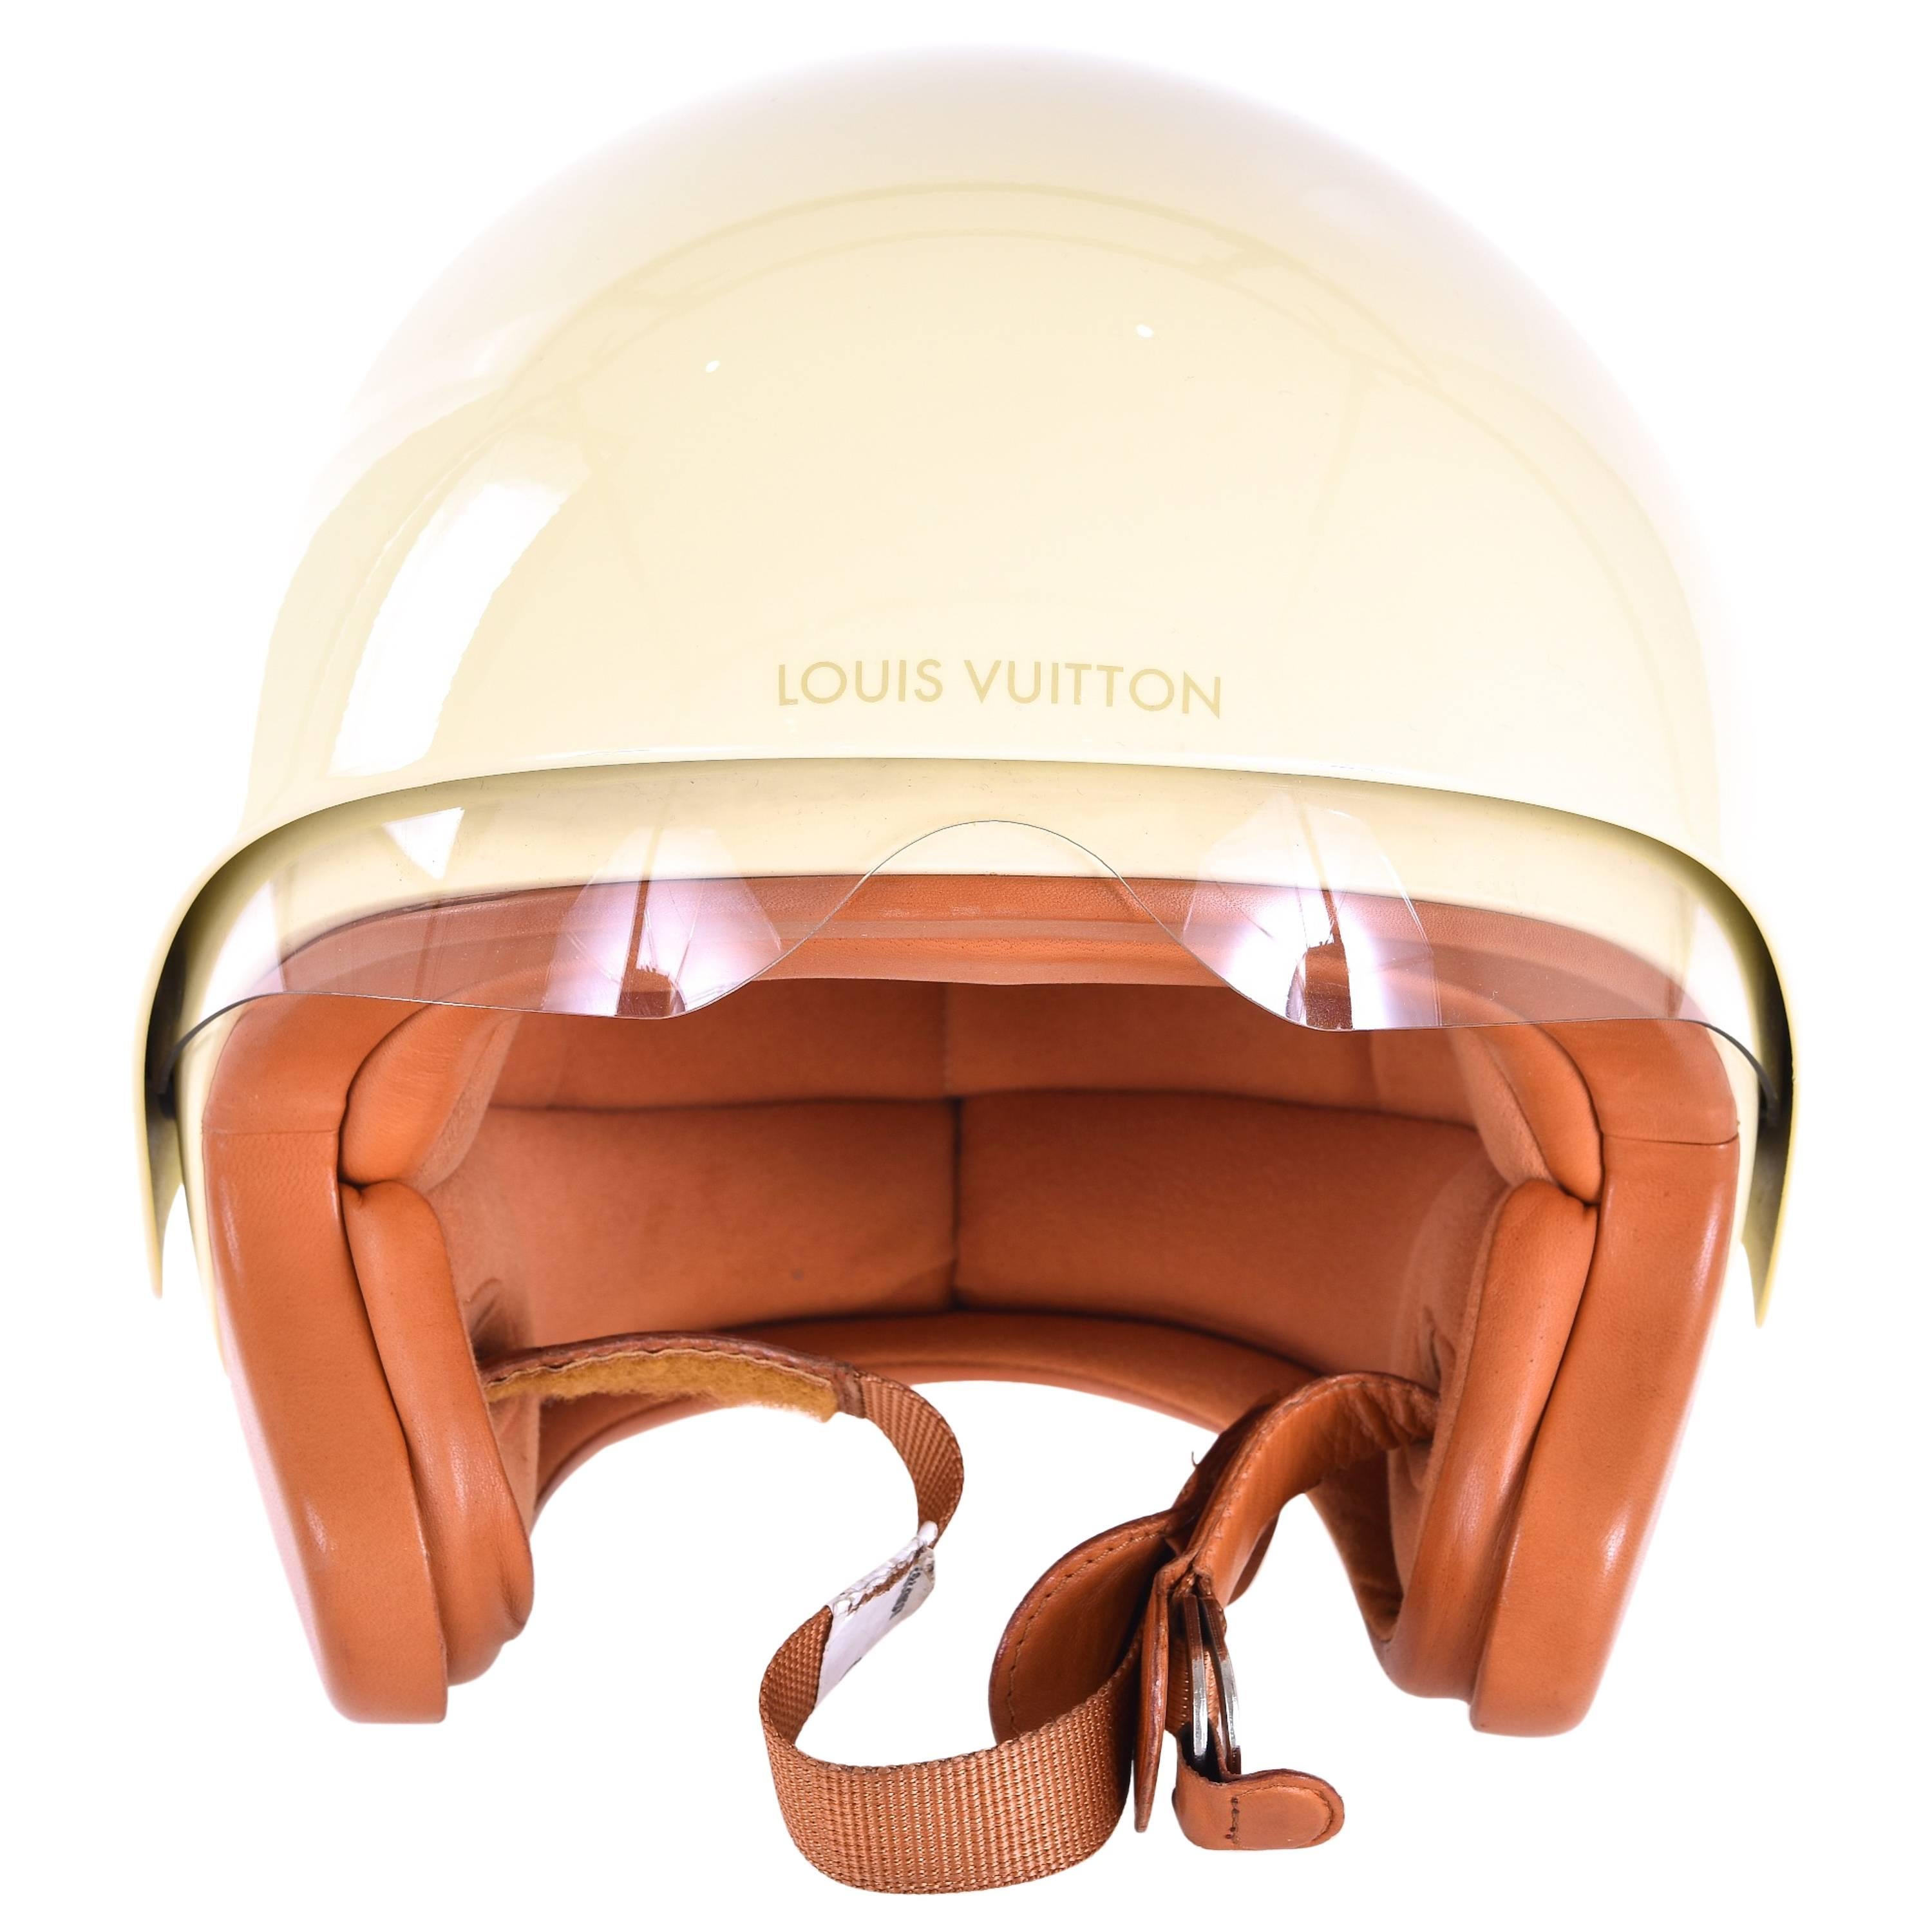 Louis Vuitton Limited Edition Damier Beige Motorcycle Vespa Helmet JaneFinds